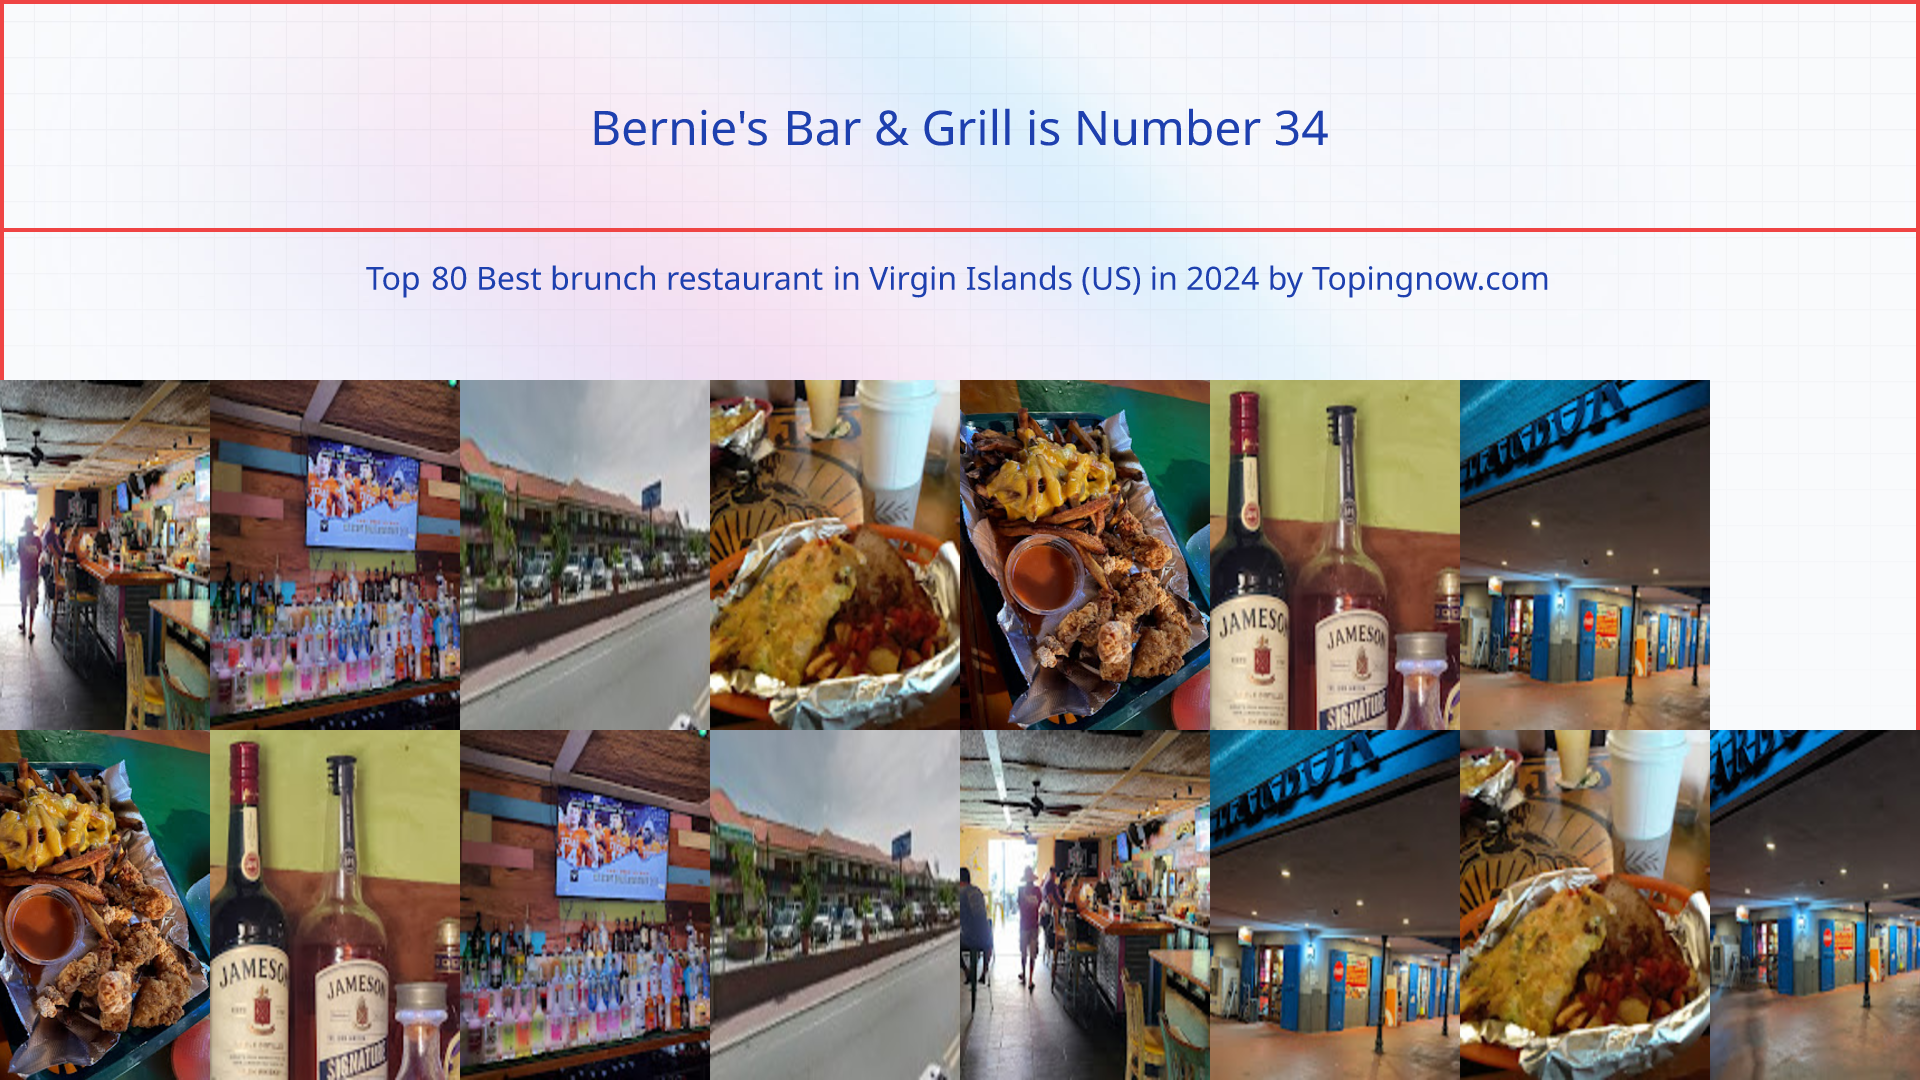 Bernie's Bar & Grill: Top 80 Best brunch restaurant in Virgin Islands (US) in 2024